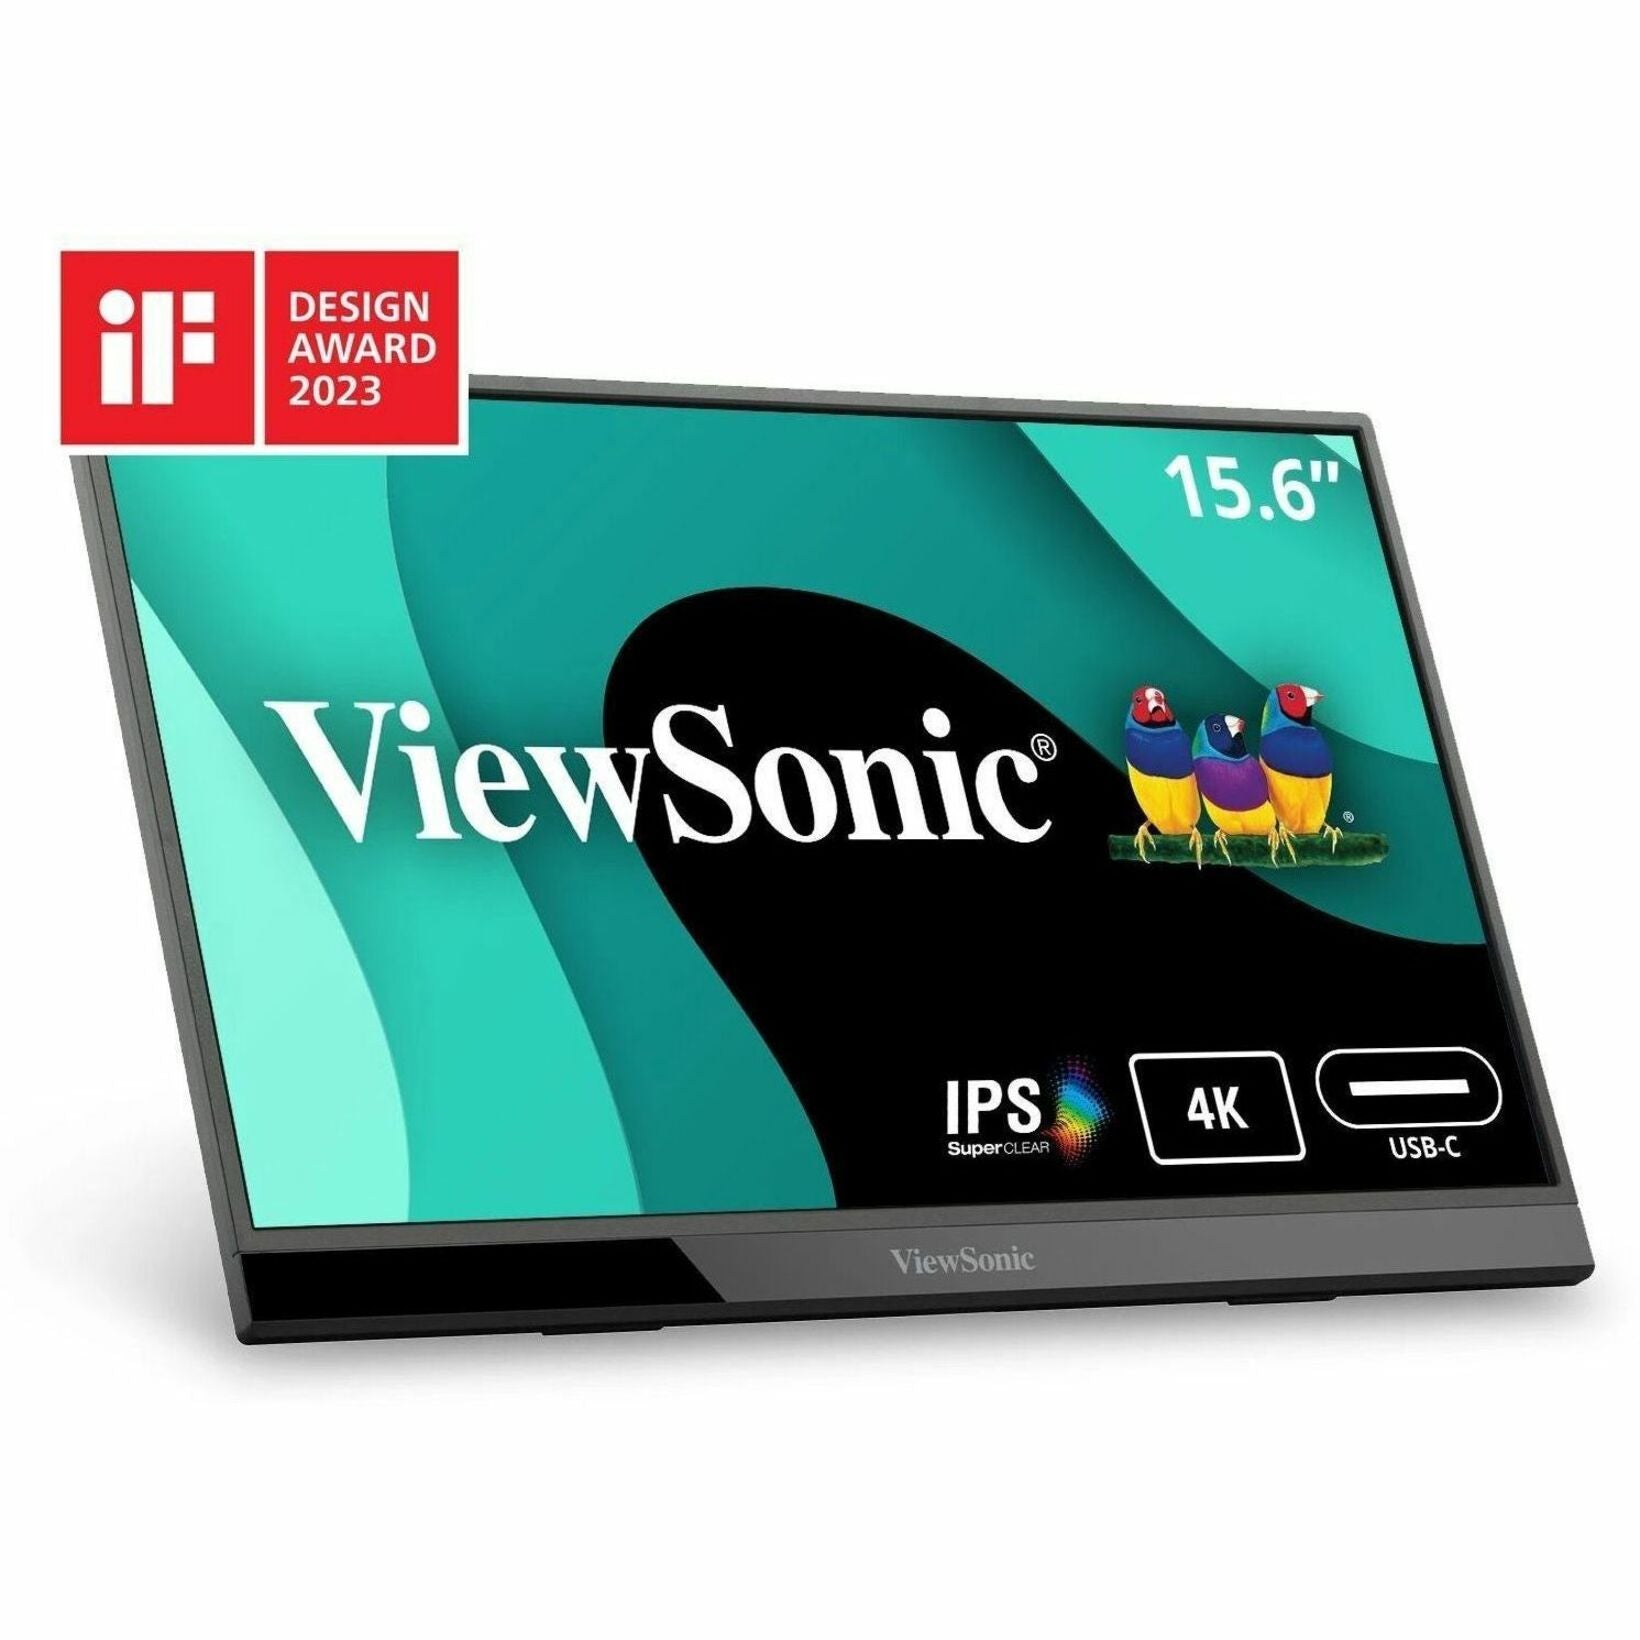 ViewSonic VX1655-4K Gaming LED Monitor, 15.6" 4K UHD Portable Monitor with 60W USB C and mini HDMI